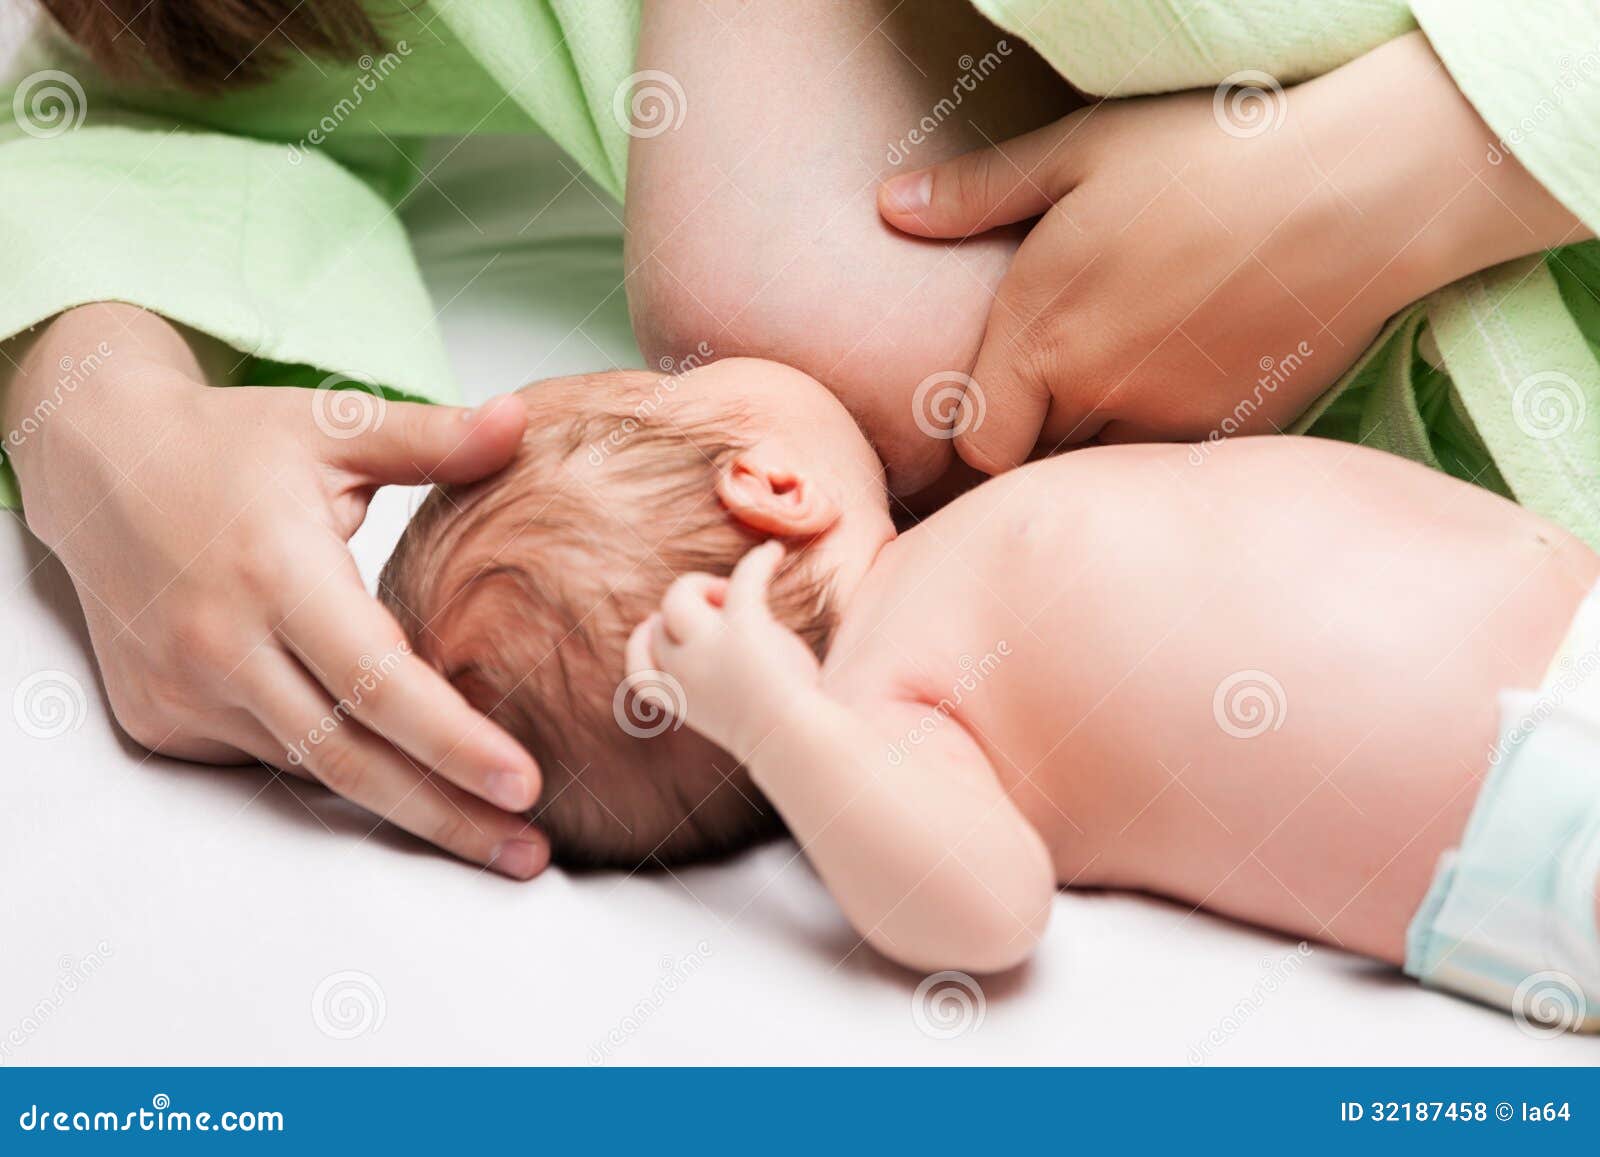 anthony truelove add girl sucking breast milk photo